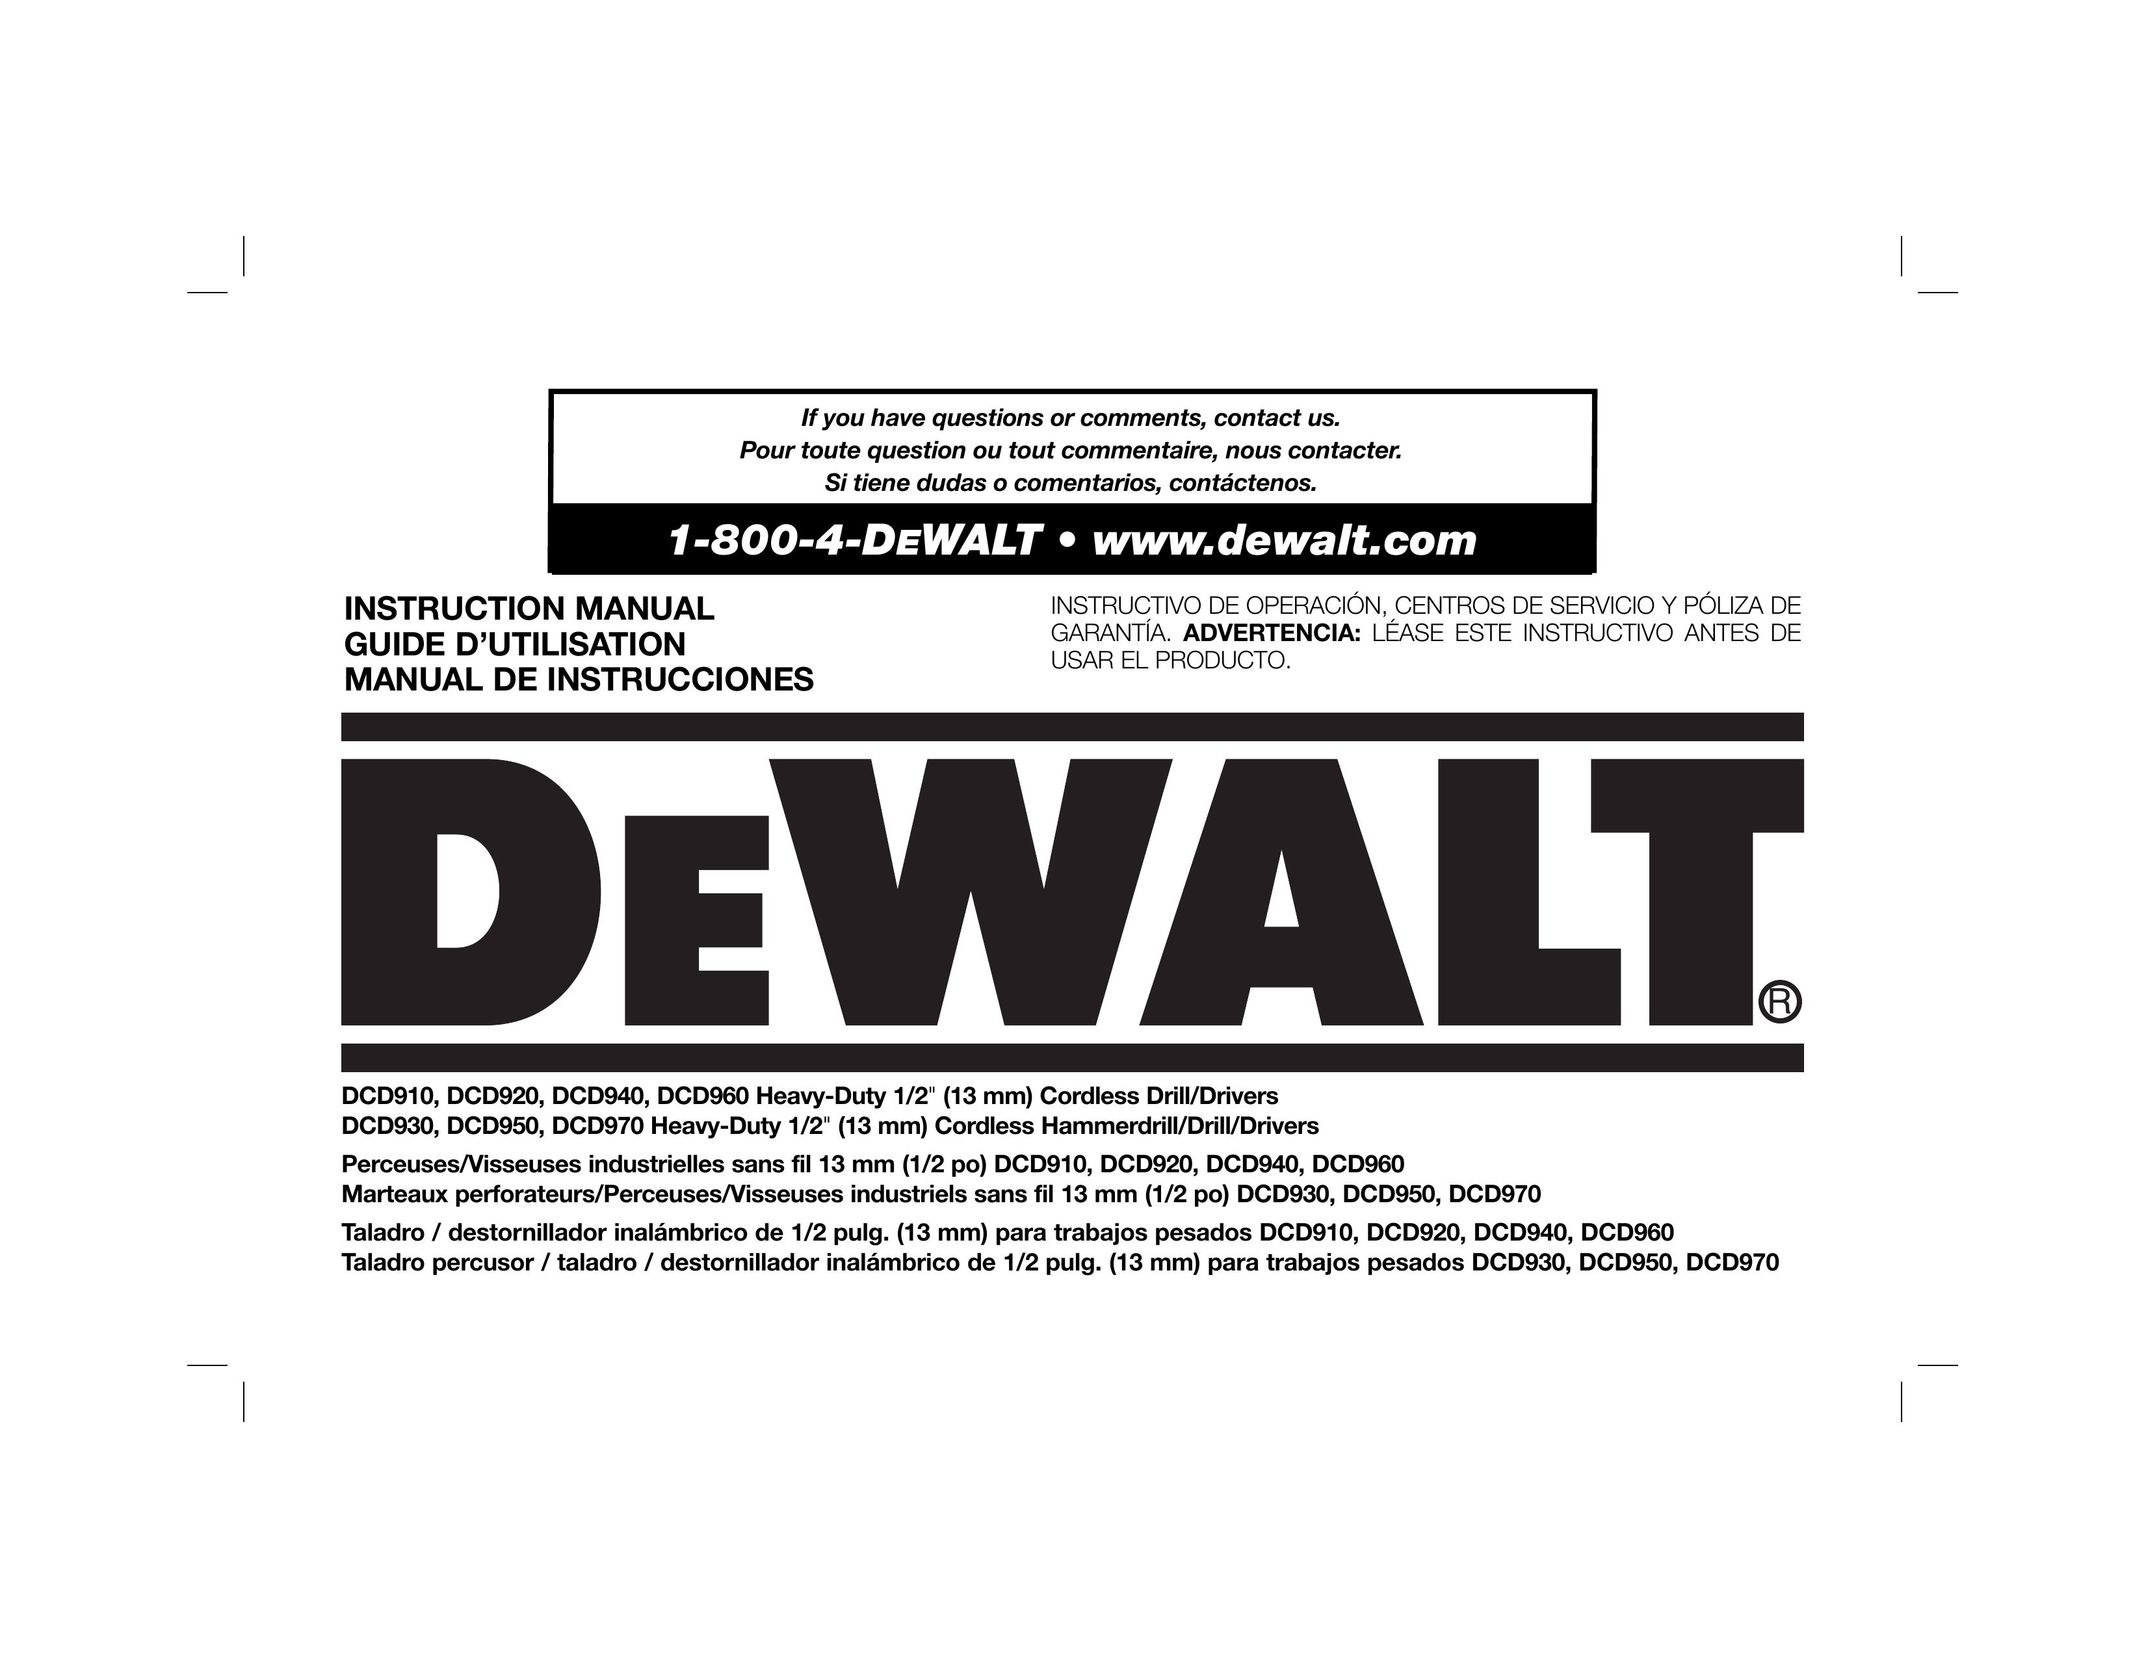 DeWalt DCD910 Cordless Drill User Manual